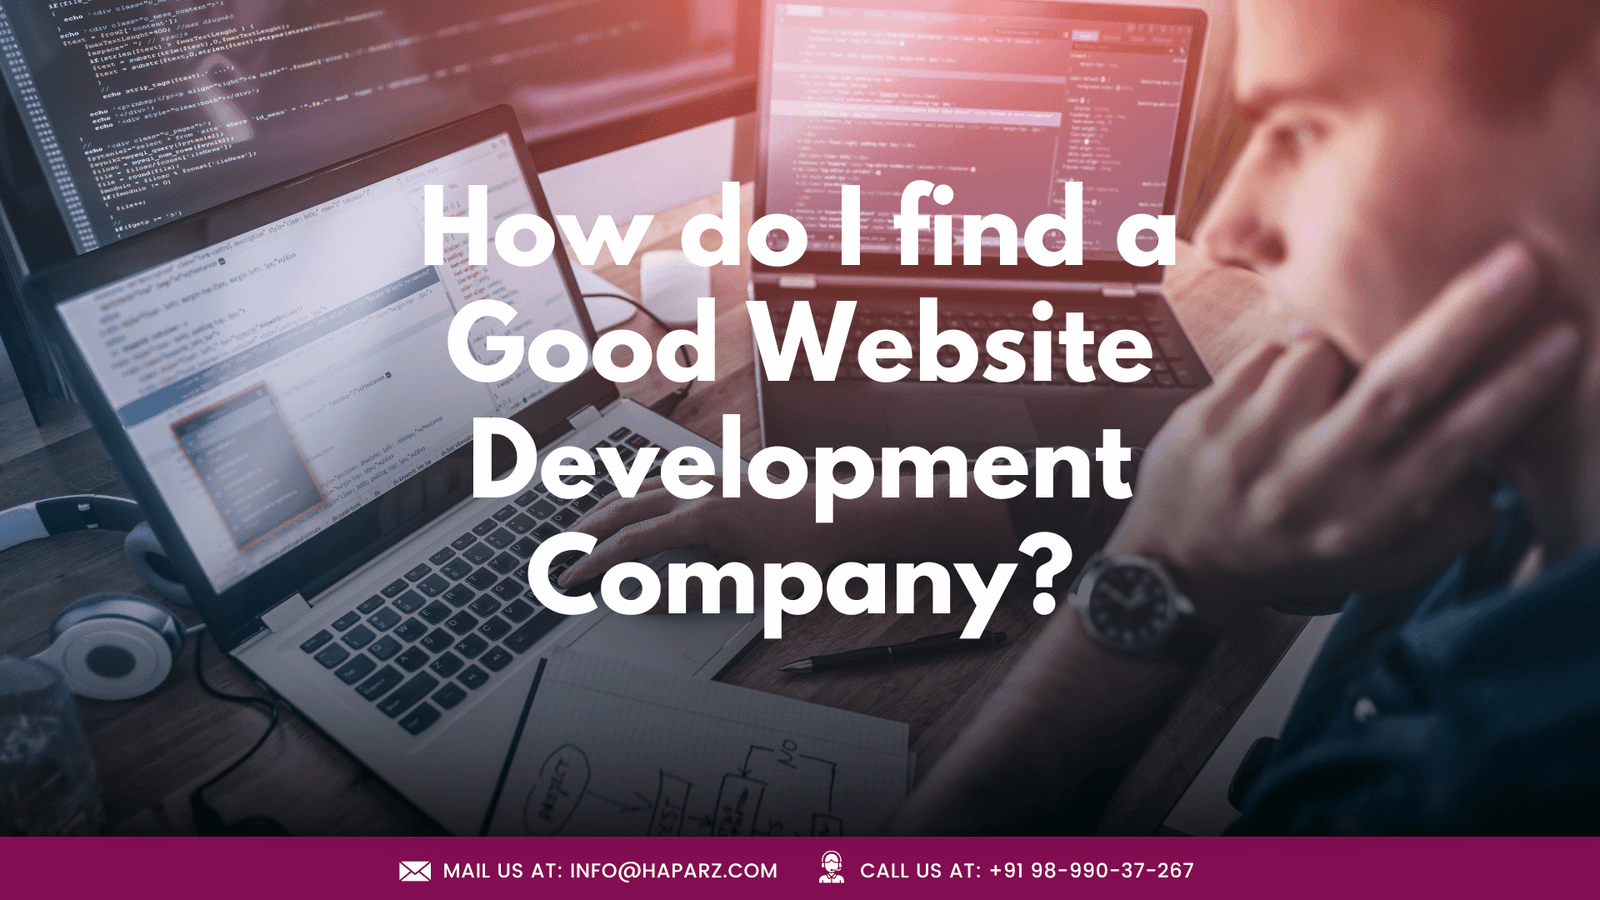 How do I find a Good Website Development Company?